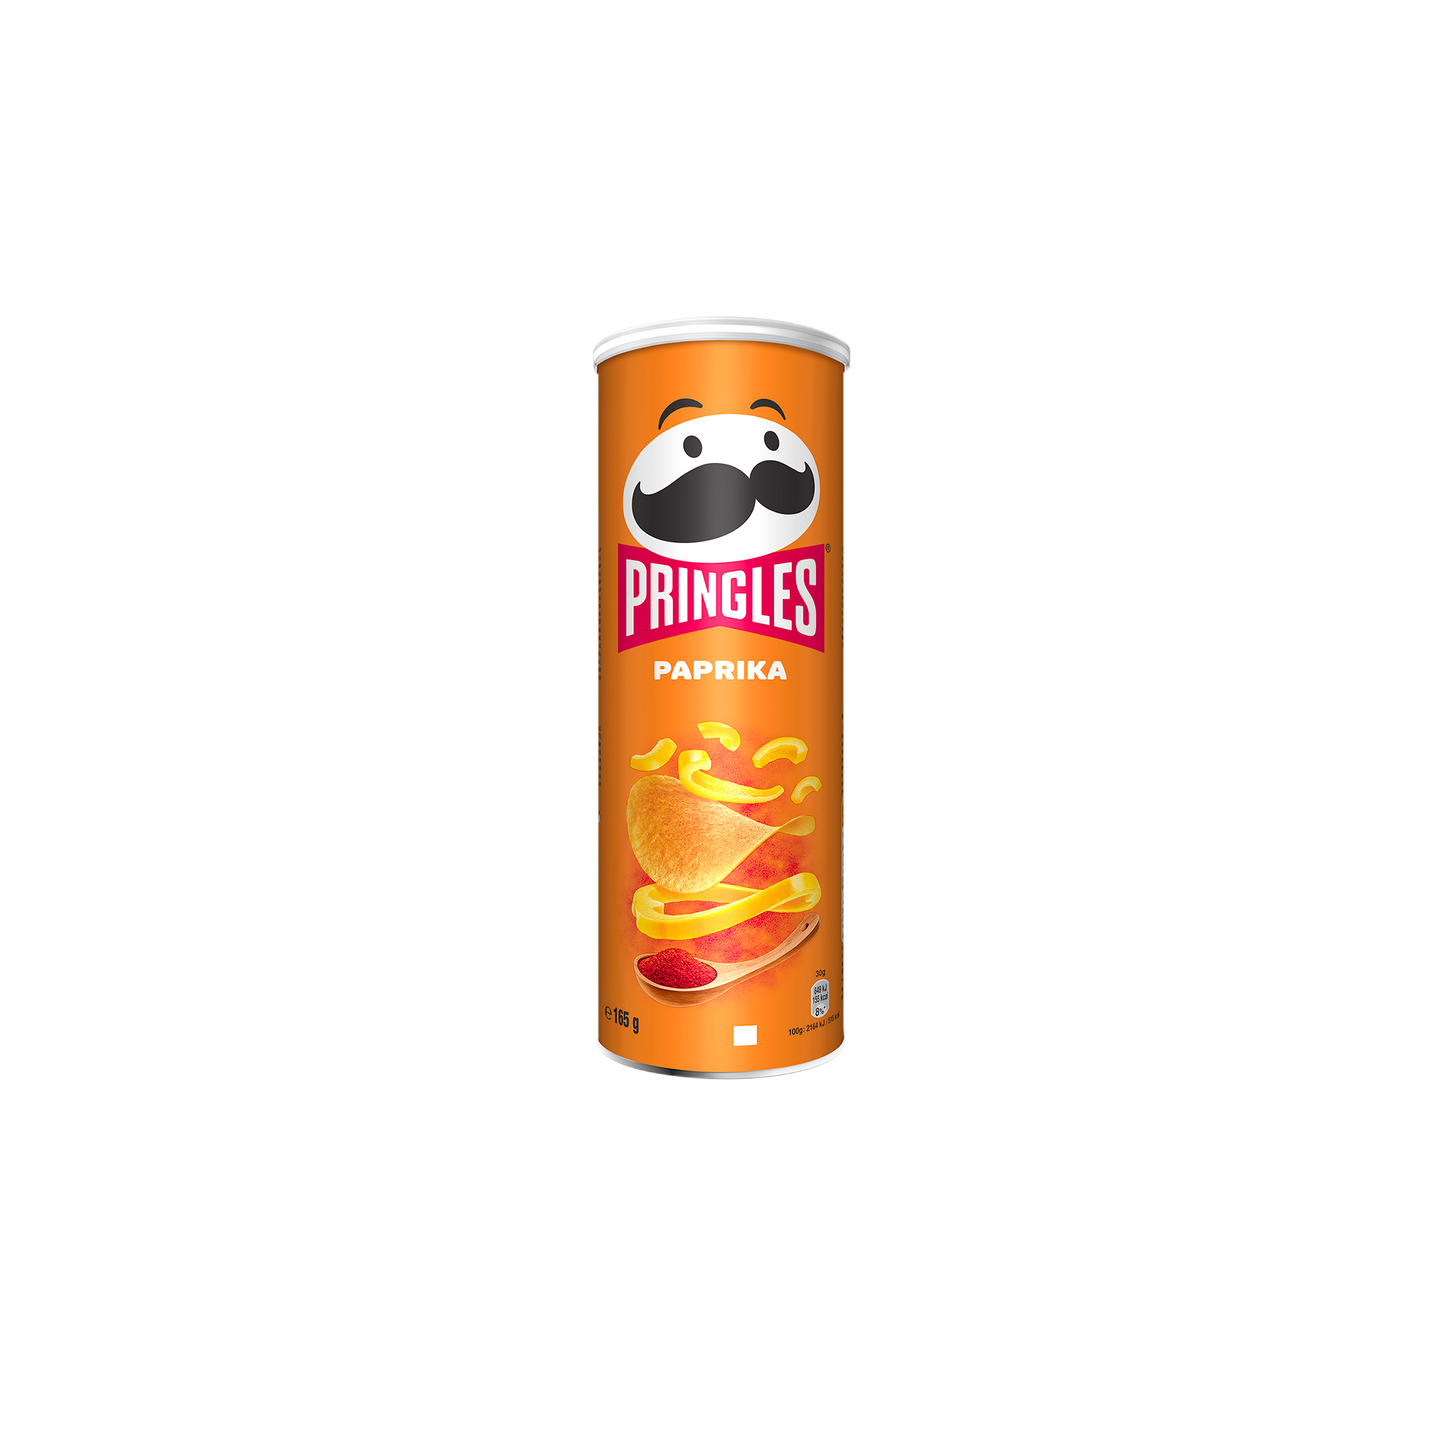 Pringles Paprika 200g